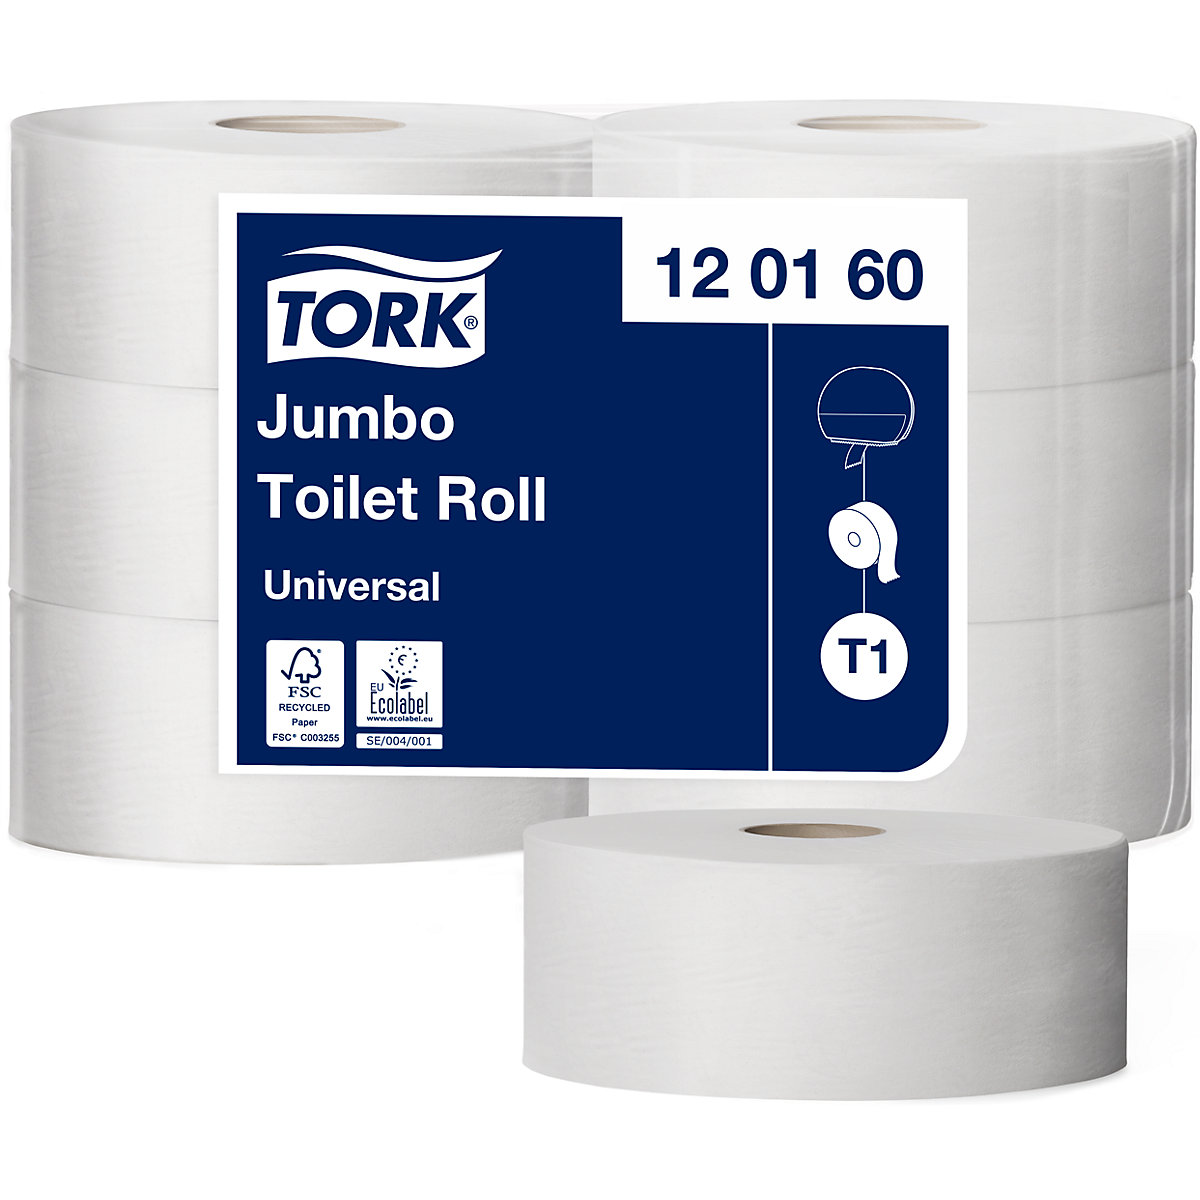 Jumbo - toilet paper, industrial roll - TORK